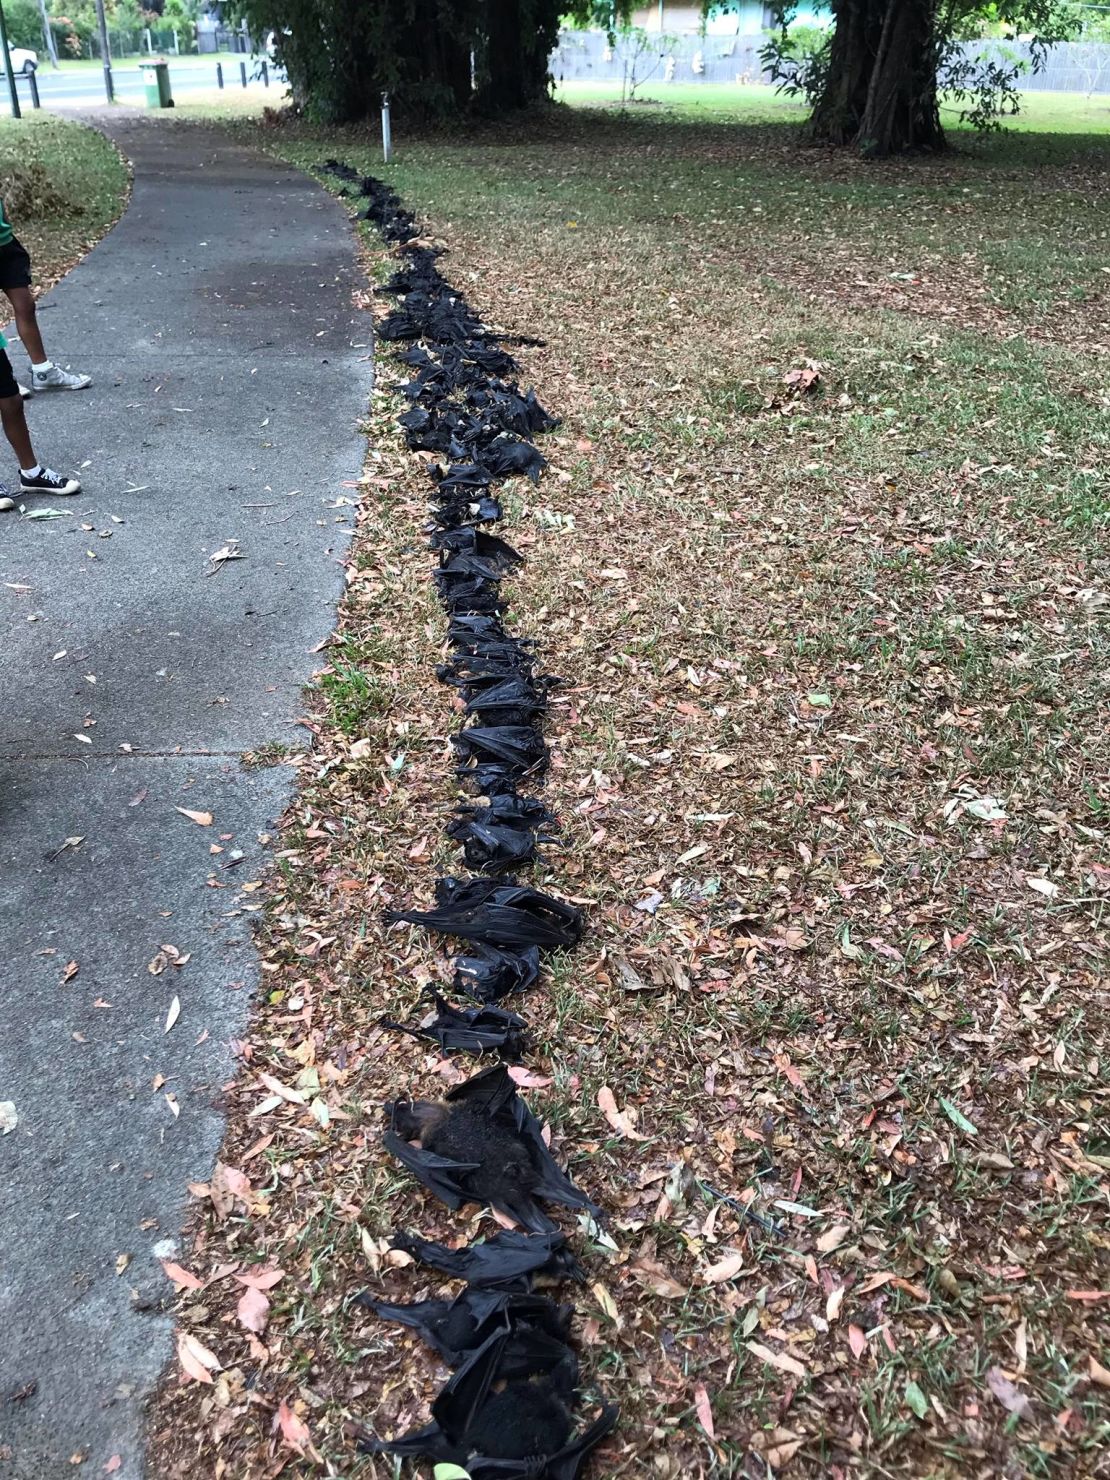 Volunteers line up dead bats killed by a severe heat wave in Northern Queensland in November 2018.